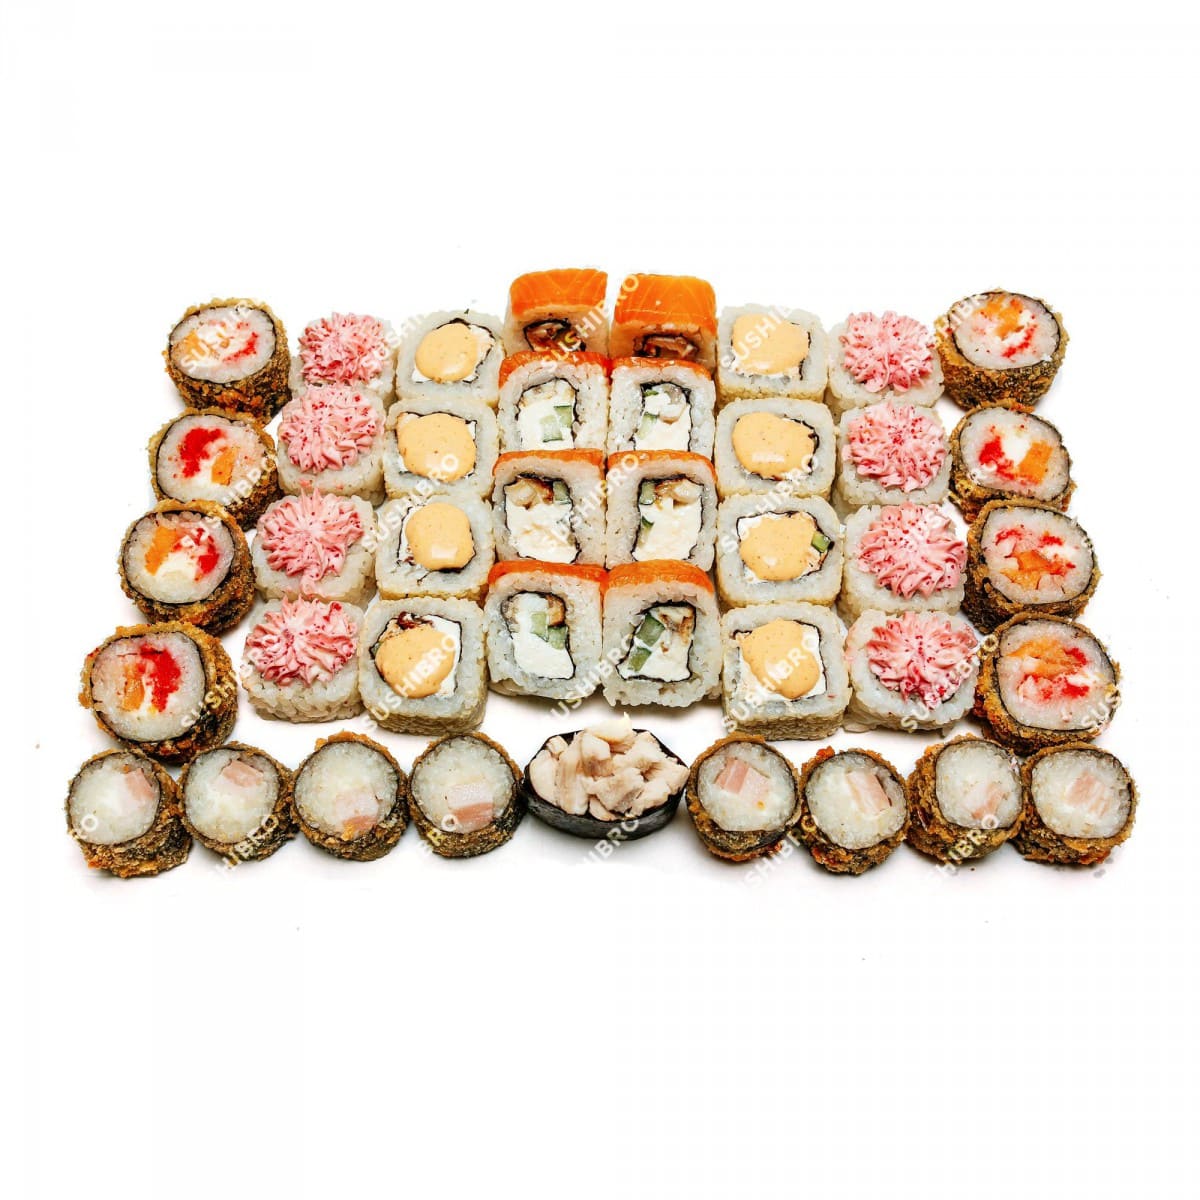 Заказать суши в махачкале на дом фото 1